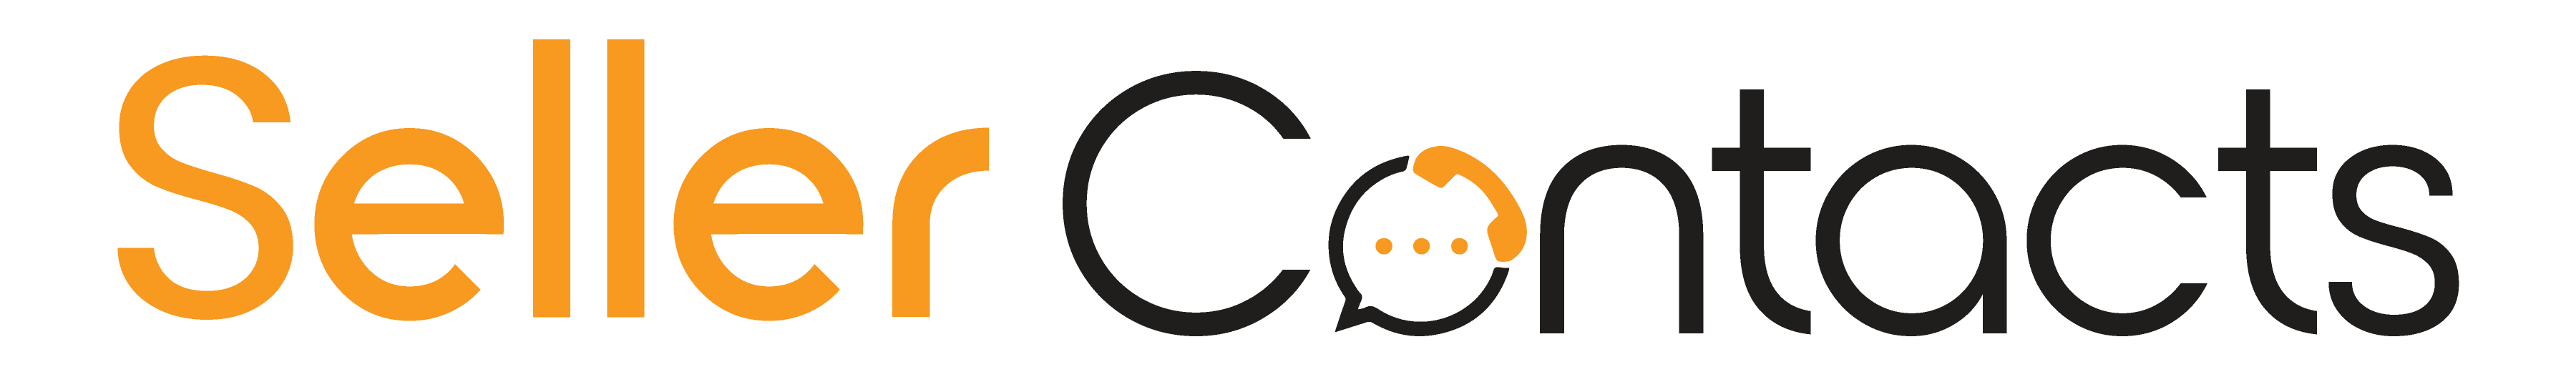 Seller Contacts Logo